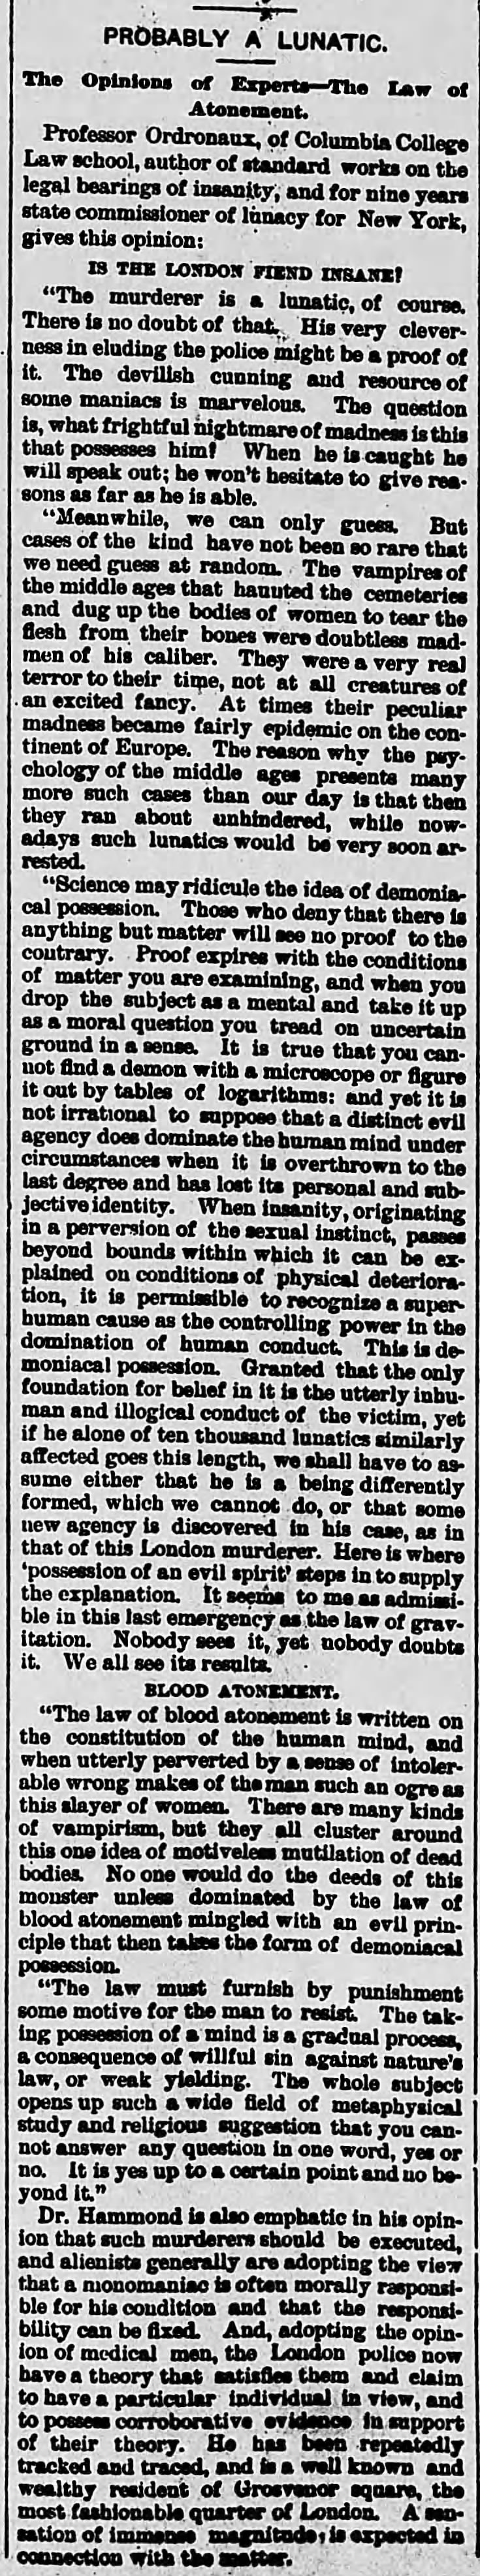 New York state commissioner of lunacy calls Jack the Ripper a lunatic, Nov 1888